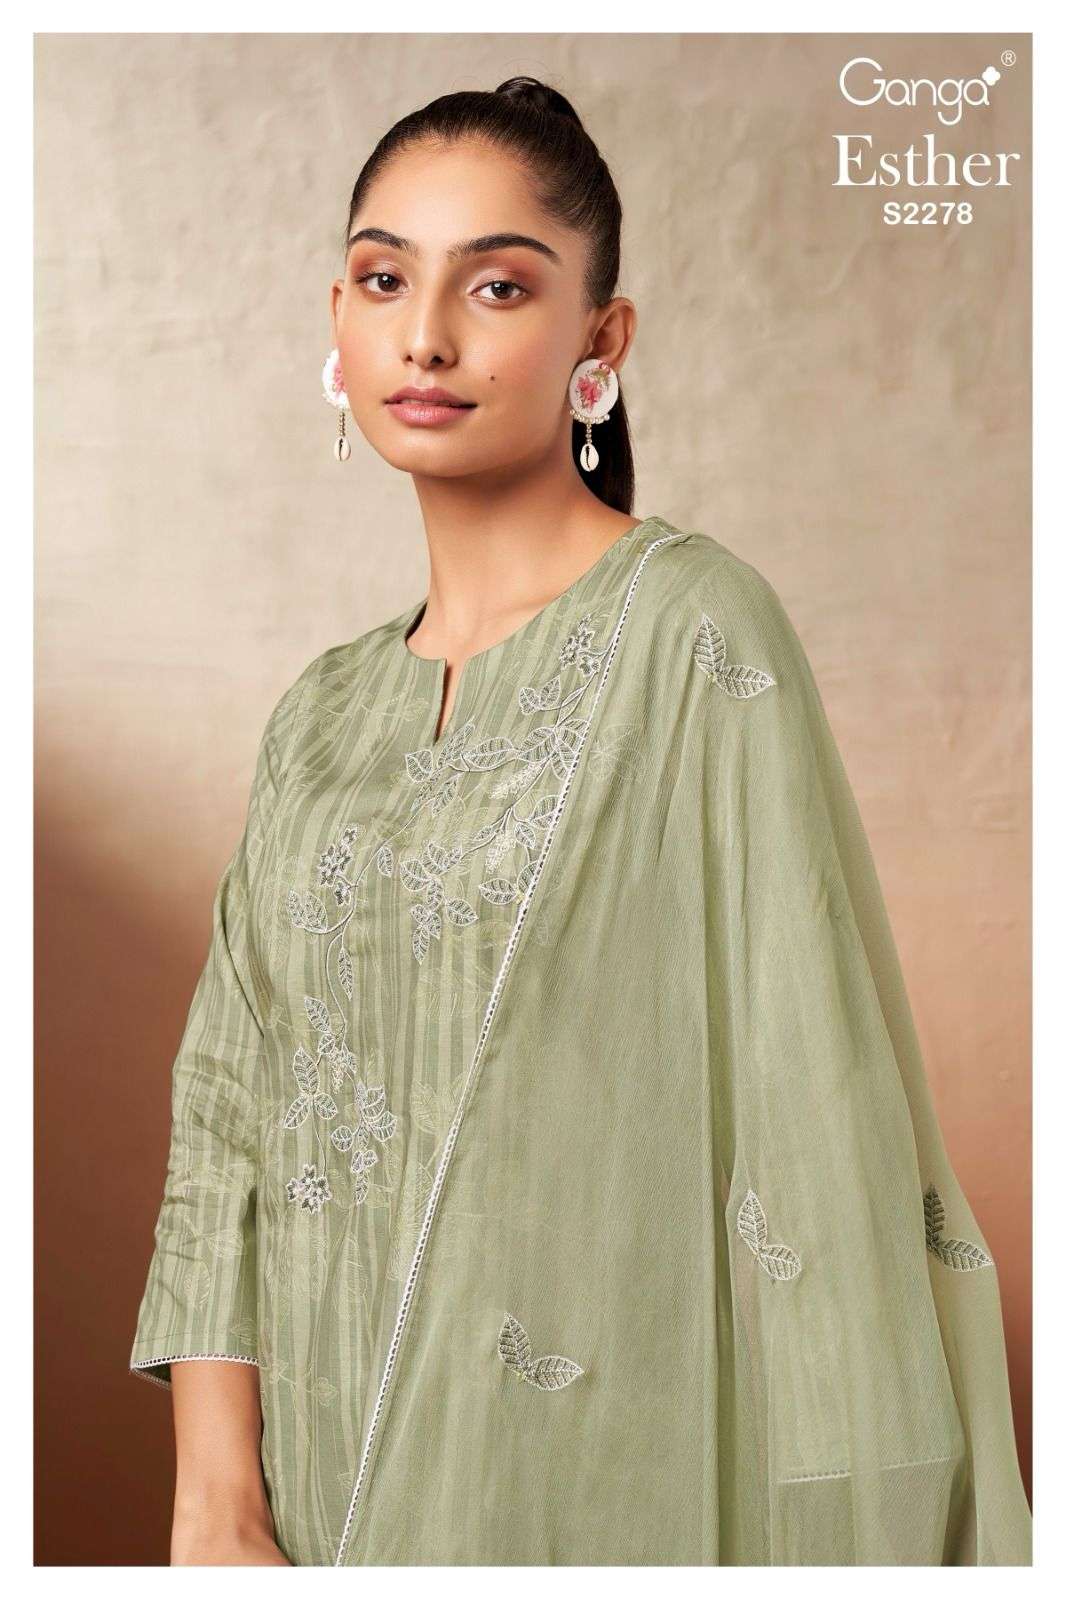 Ganga Esther 2278 Exclusive Cotton Ladies Suit Catalog Wholesale By Online